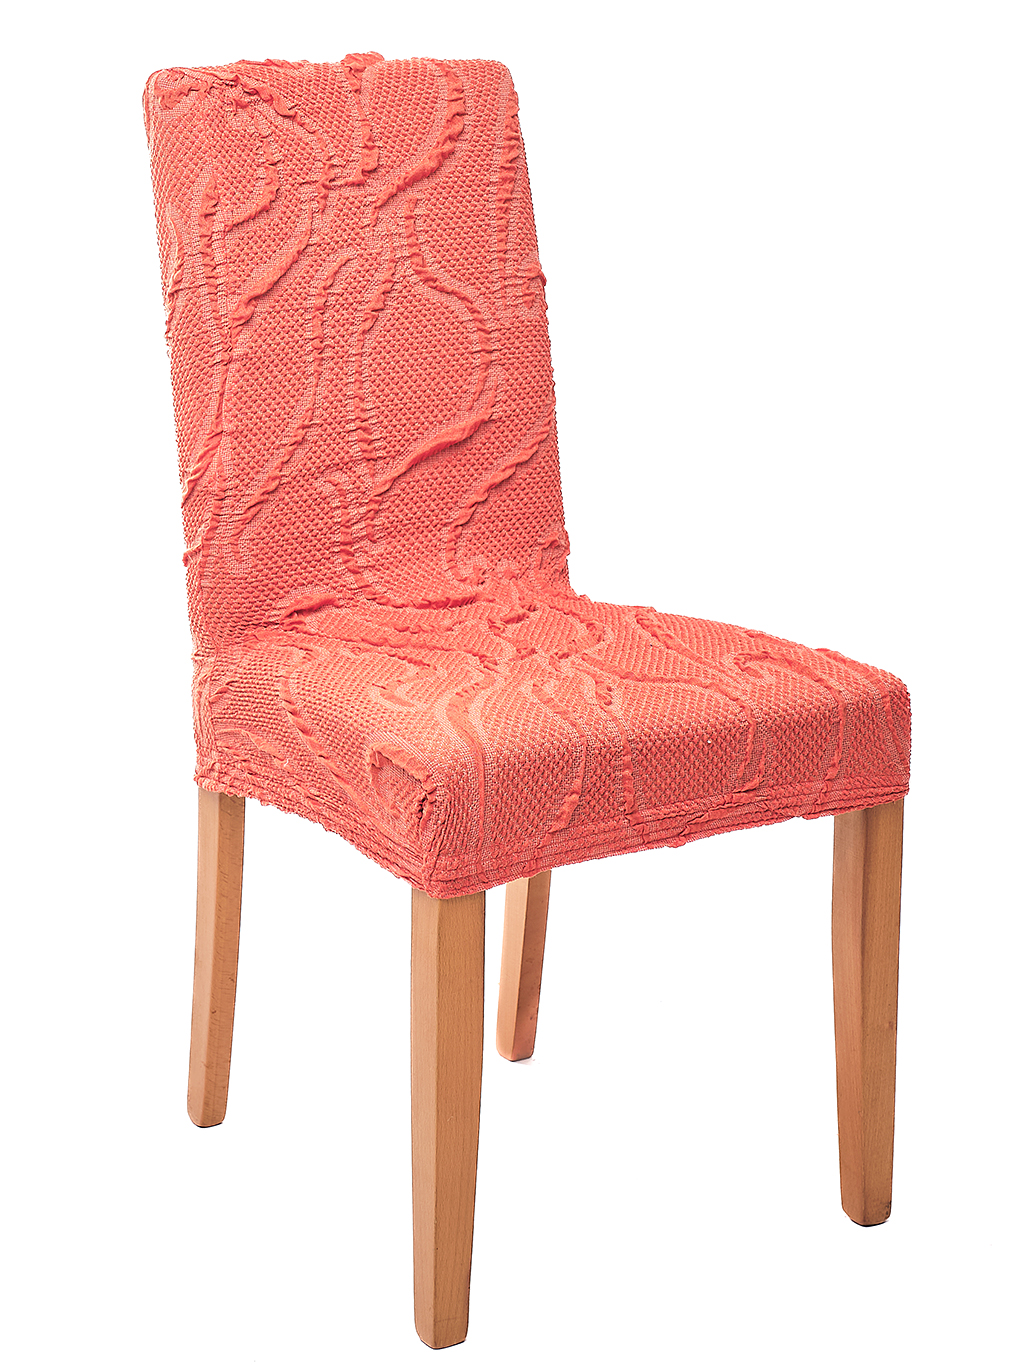 Komashop Potah na židli CAMILA Barva: Oranžová